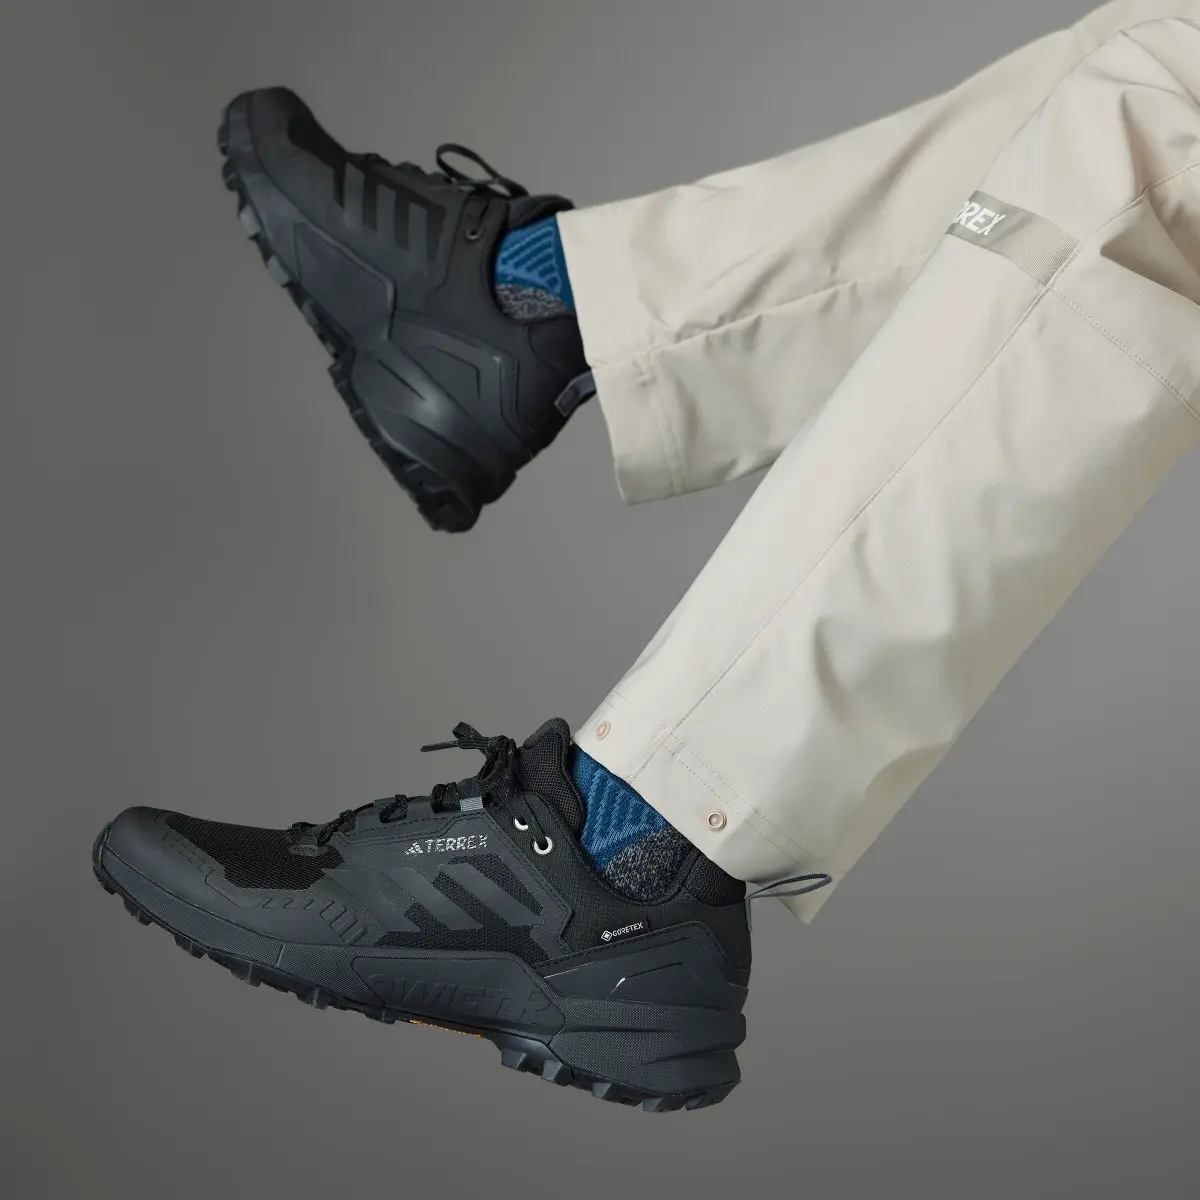 Adidas Terrex Swift R3 GORE-TEX Hiking Shoes. 2